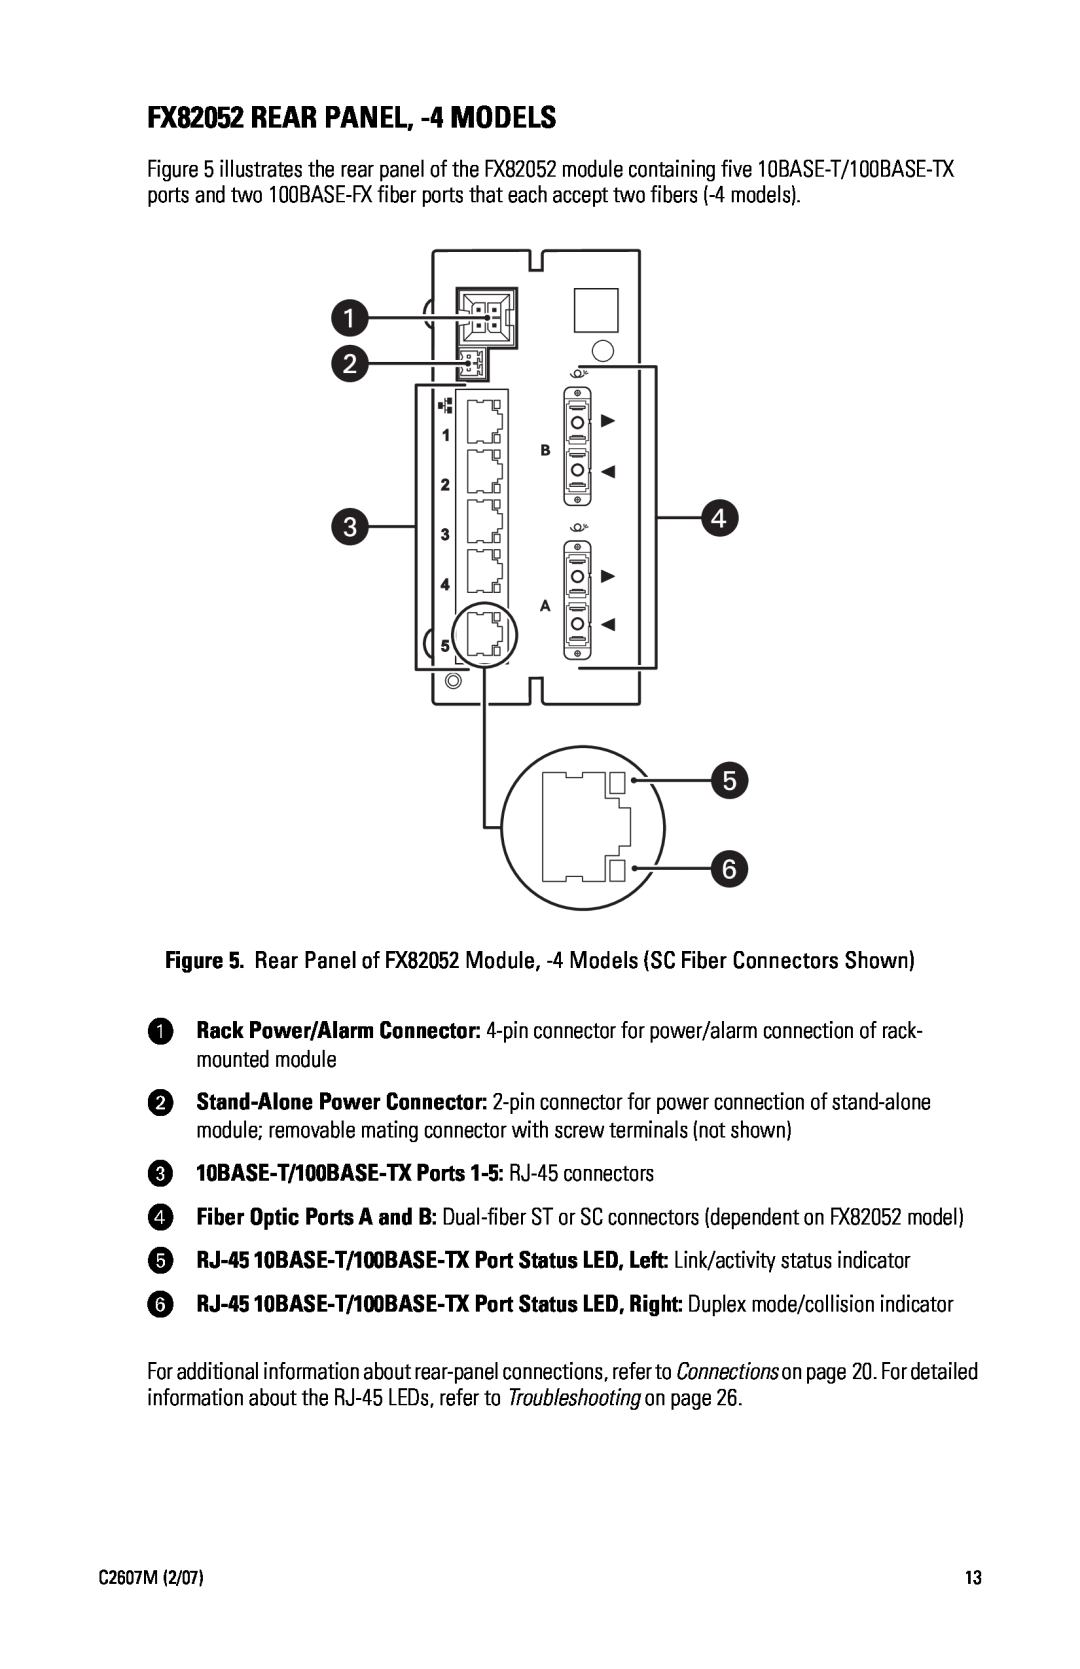 Pelco 100BASE-FX manual FX82052 REAR PANEL, -4 MODELS, ï 10BASE-T/100BASE-TX Ports 1-5 RJ-45 connectors 